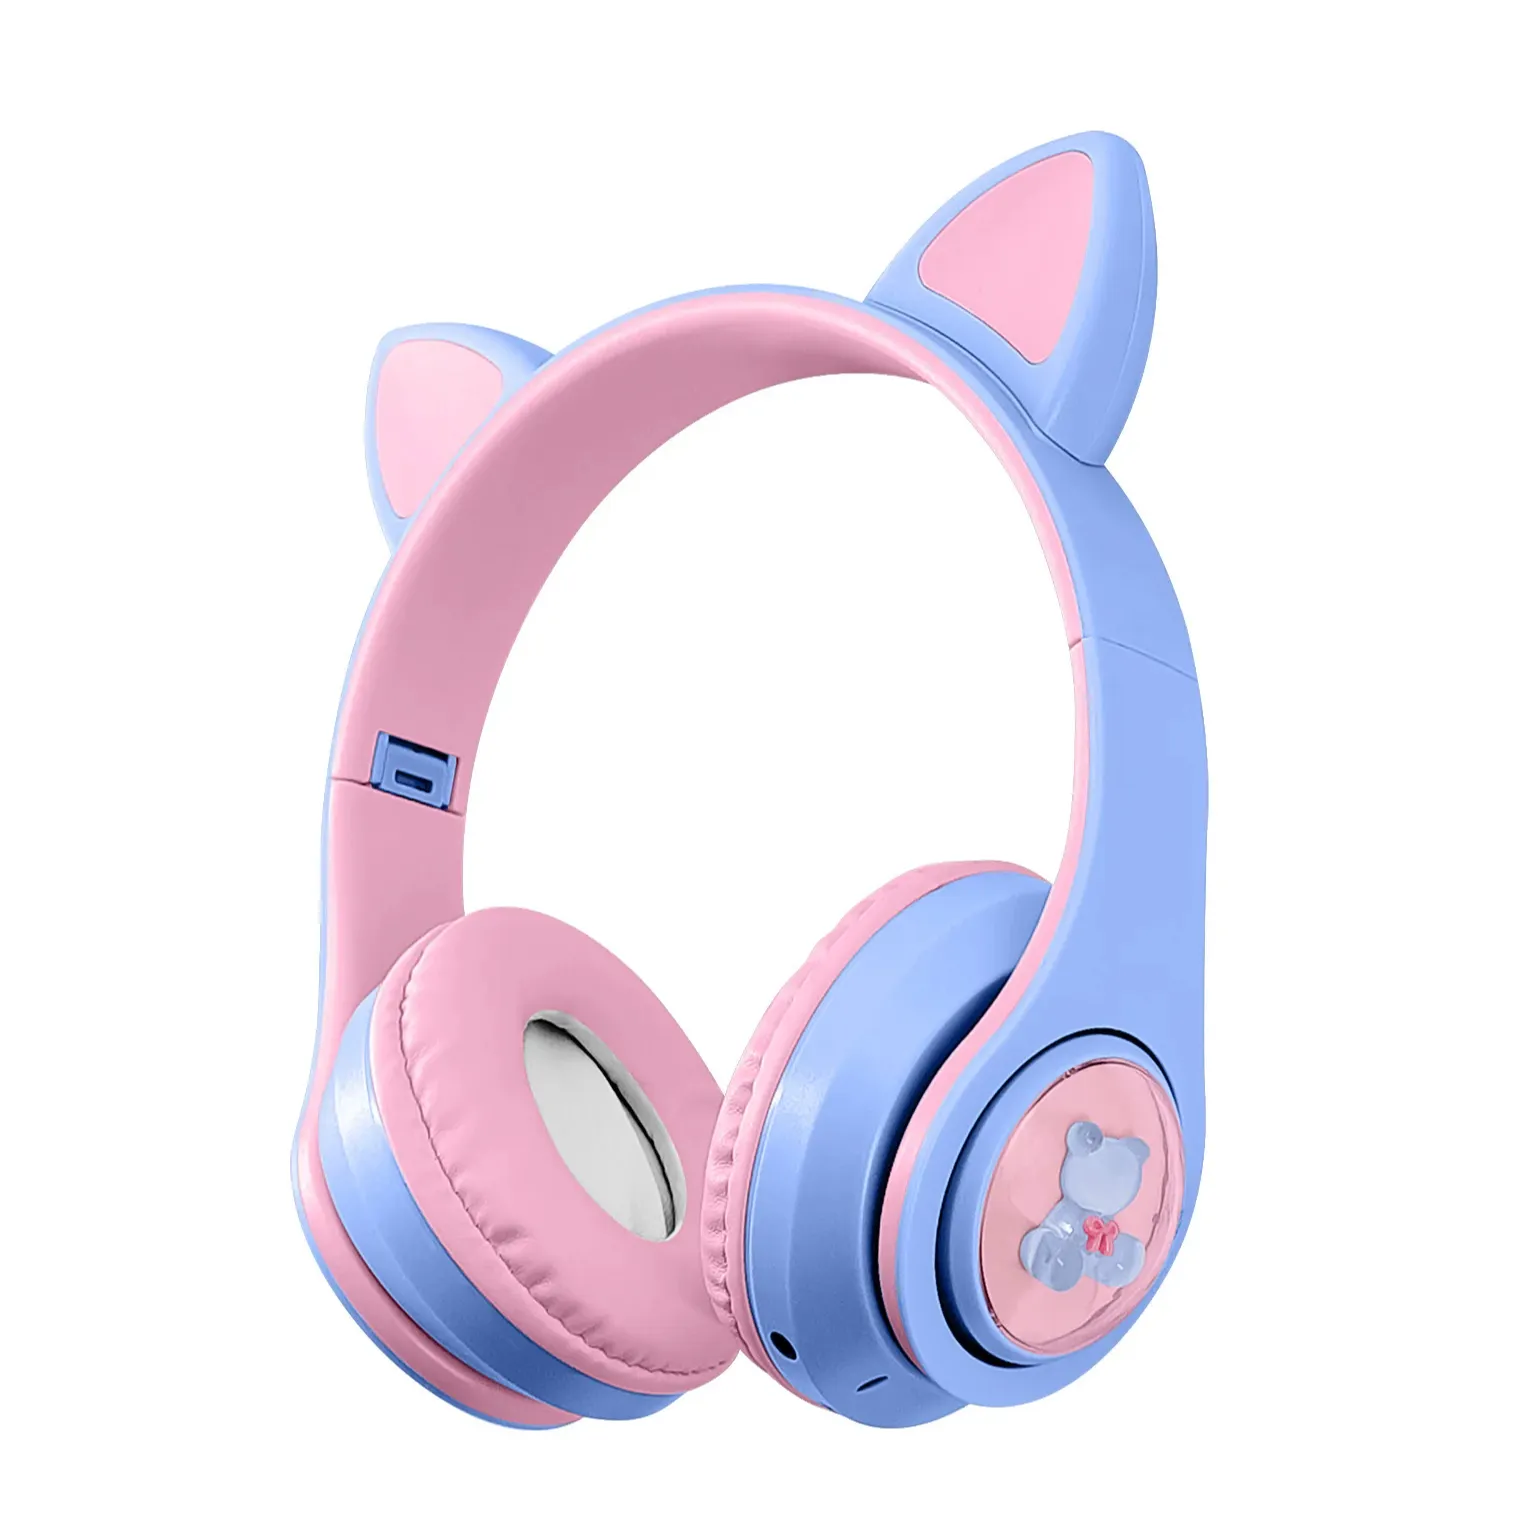 Desain baru headphone telinga kucing lucu kartun headphone LED warna-warni headphone Over-Ear pengisian daya nirkabel untuk anak perempuan